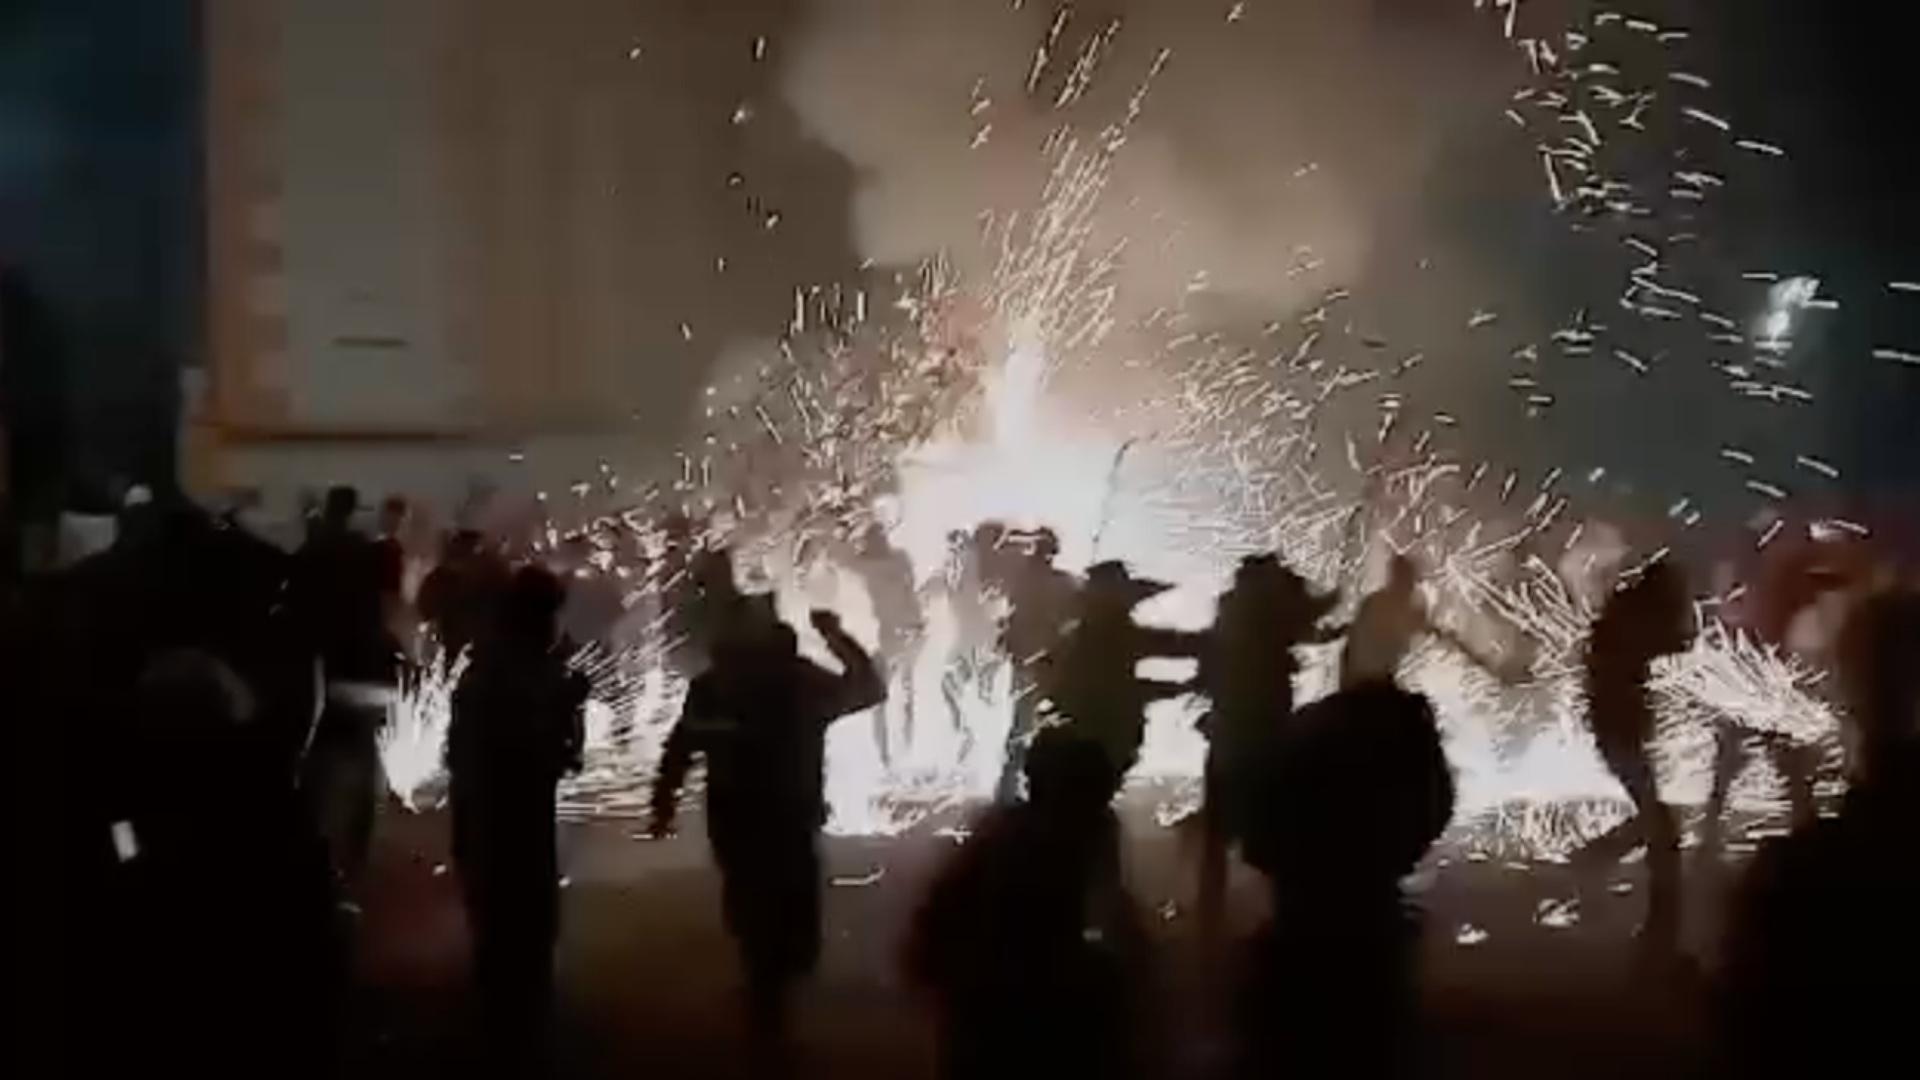 Explotan 'Toritos' en Celebración de Fiesta Patronal; Hay 2 Heridos con Quemaduras